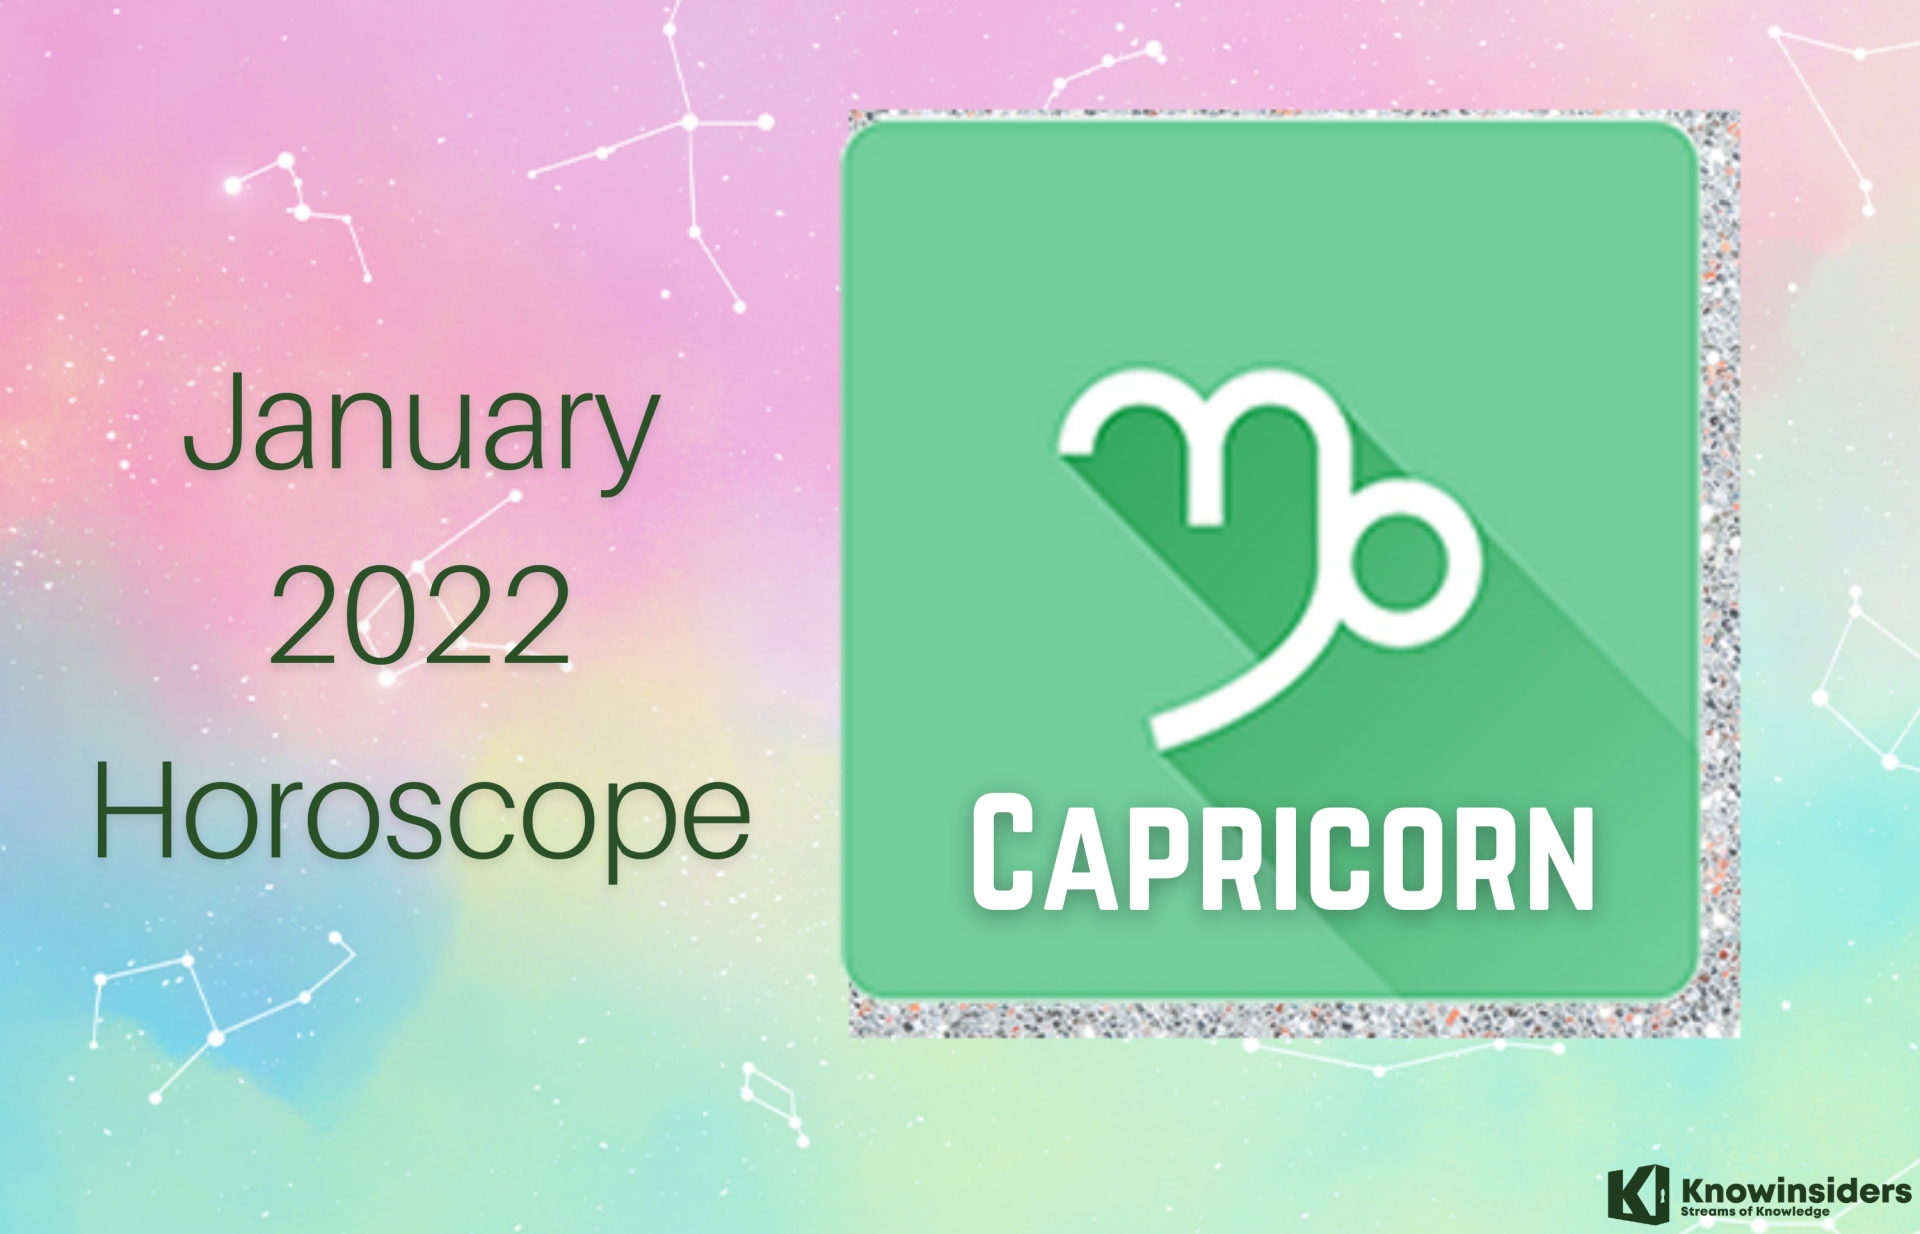 CAPRICORN January 2022 Horoscope: Prediction for Love, Career, Money